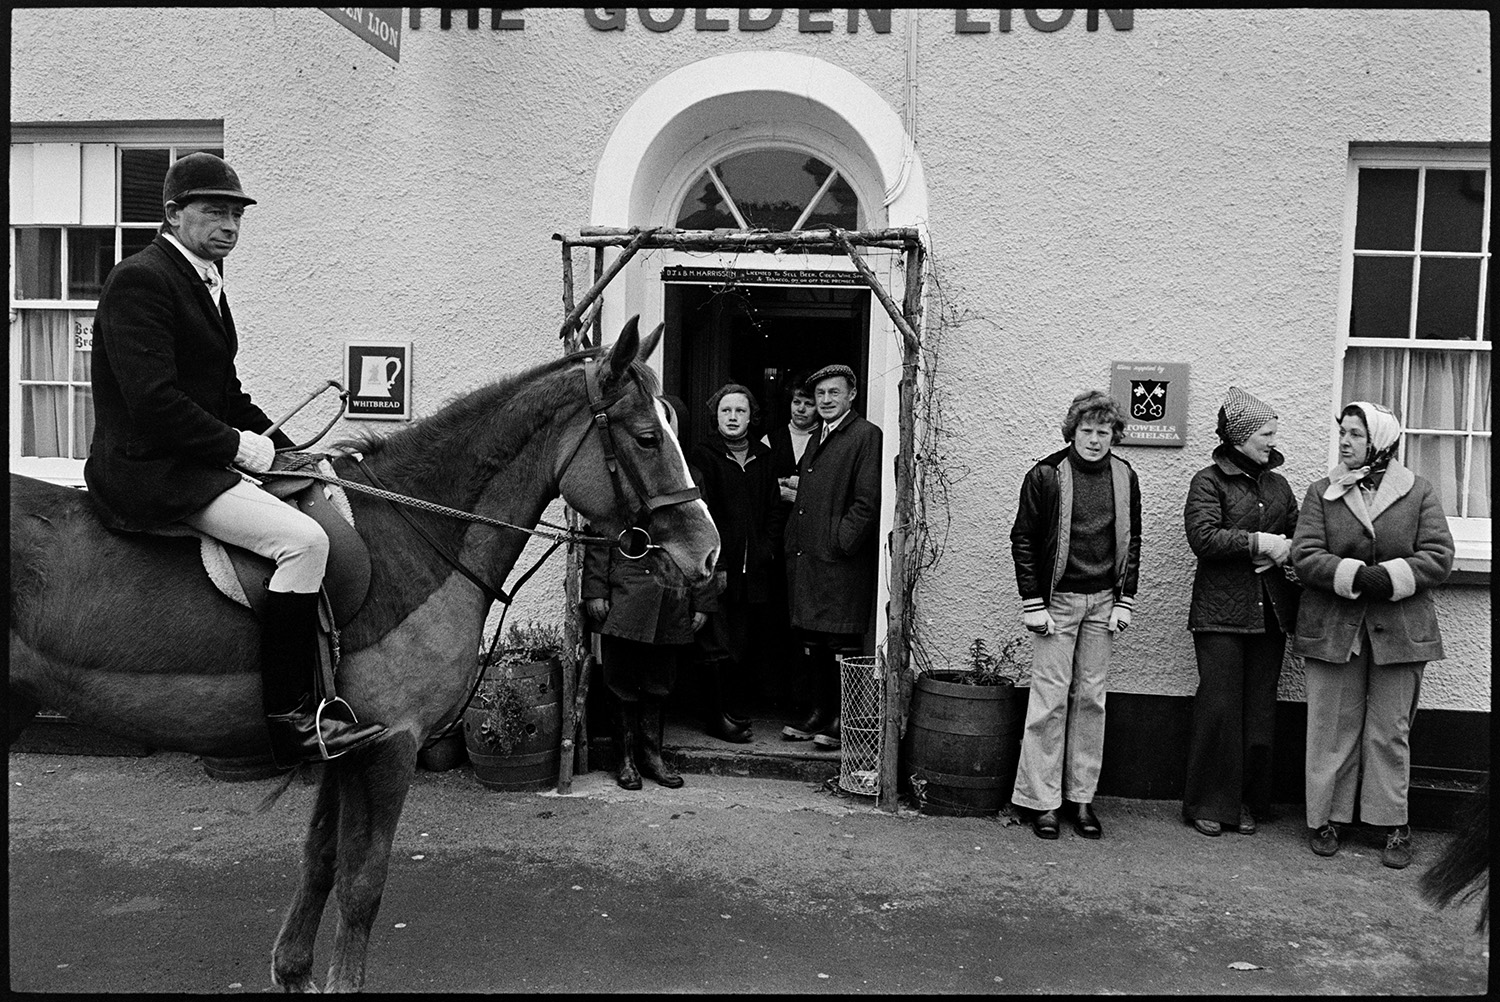 Hunt meet at village pub, with spectators, hounds and huntsmen. 
[Spectators watching a huntsman on horseback at a hunt meet outside The Golden Lion pub in High Bickington.]